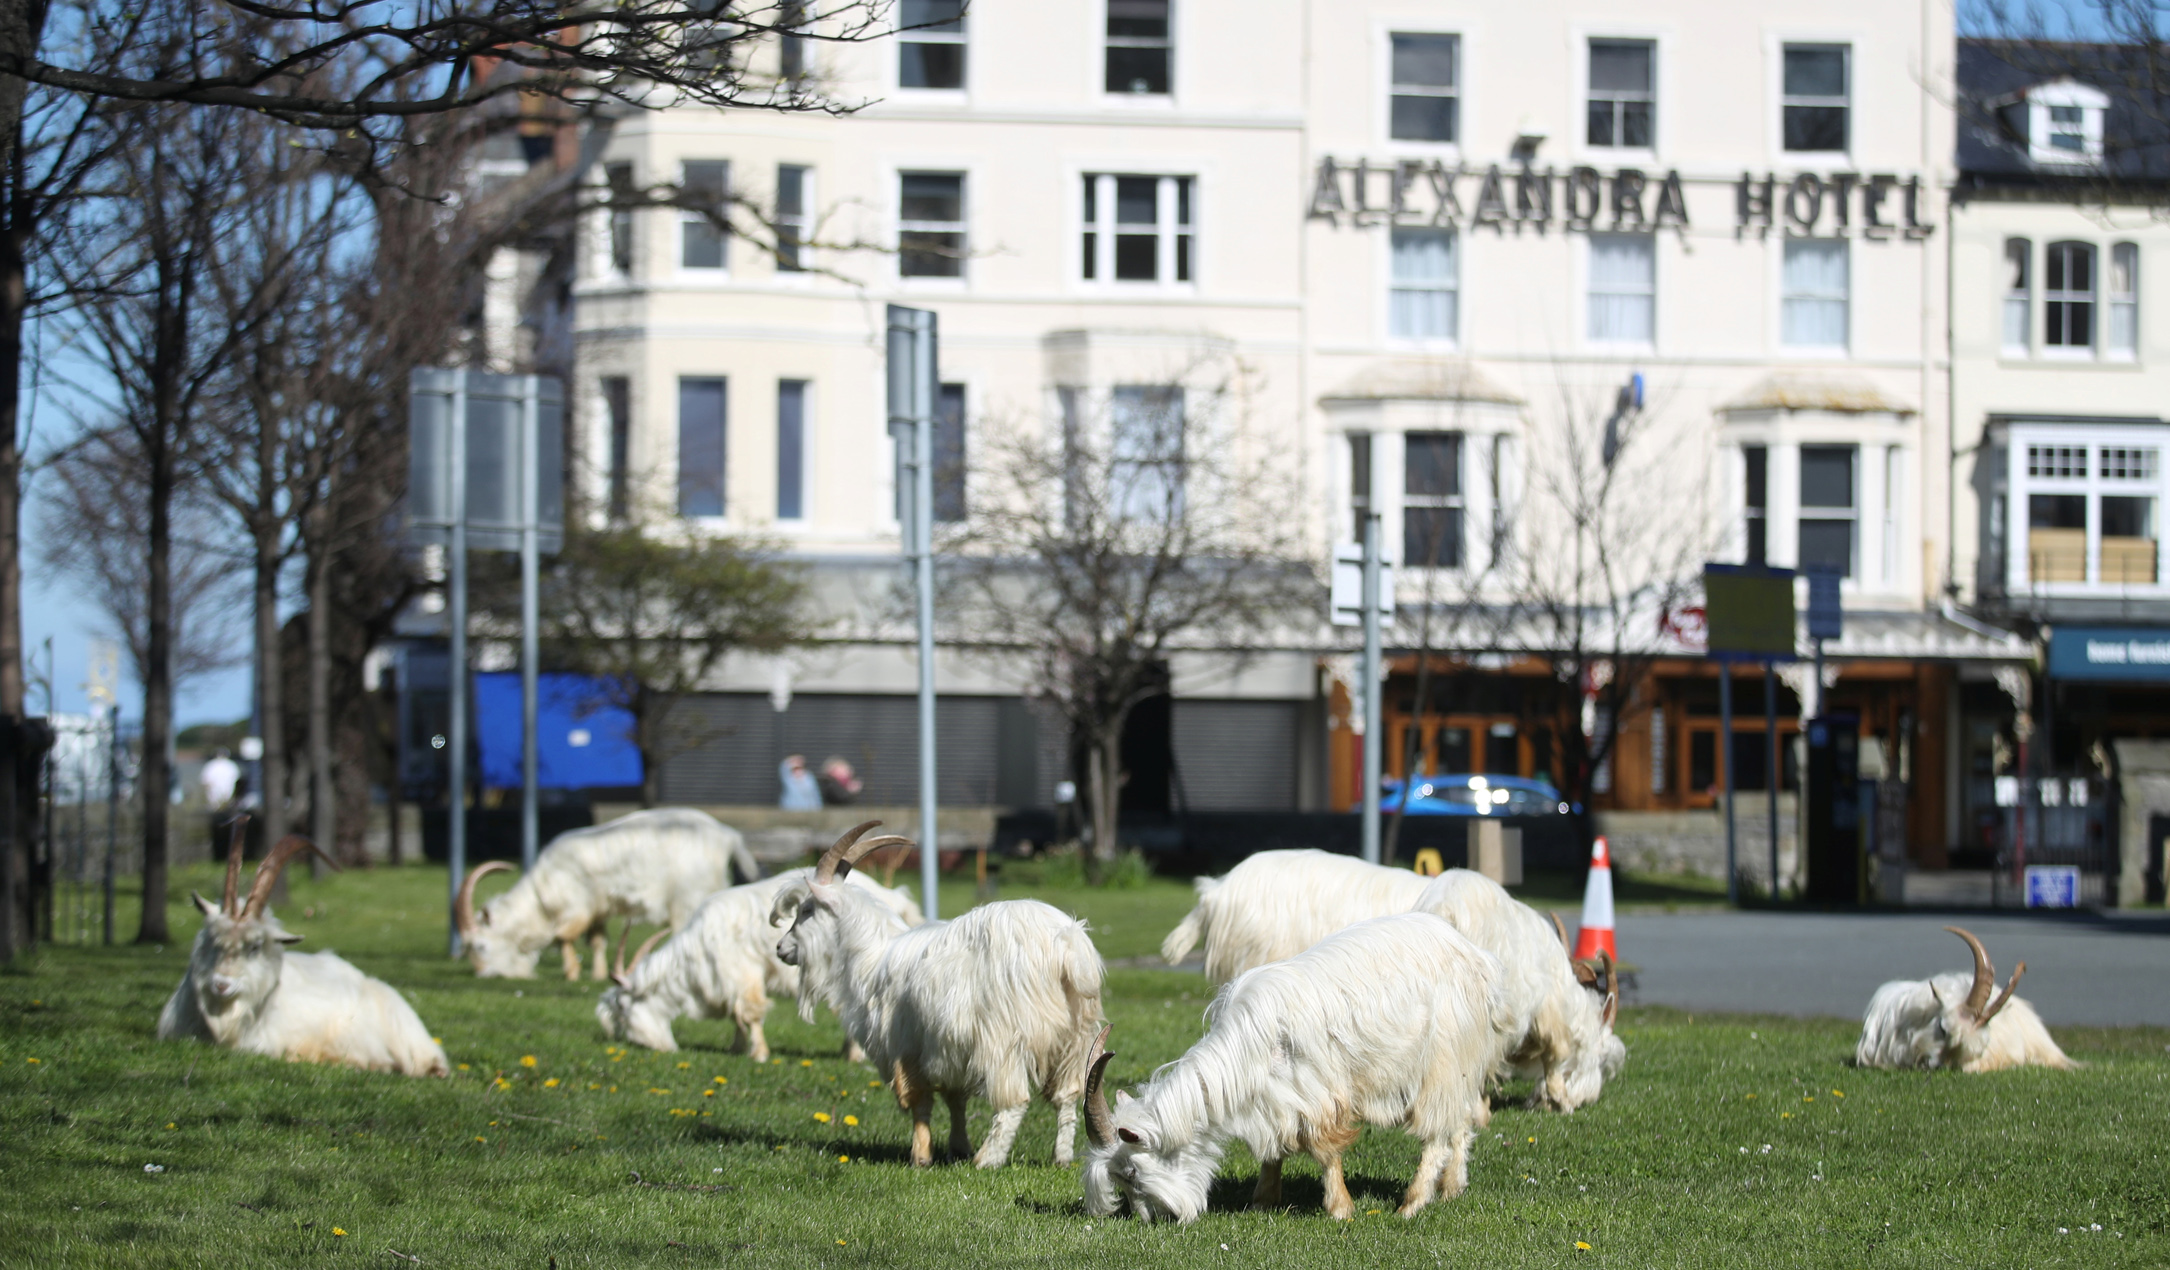 A herd of goats is seen in Llandudno as the spread of the coronavirus disease (COVID-19) continues, Llandudno, Wales, Britain, March 31, 2020. REUTERS/Carl Recine